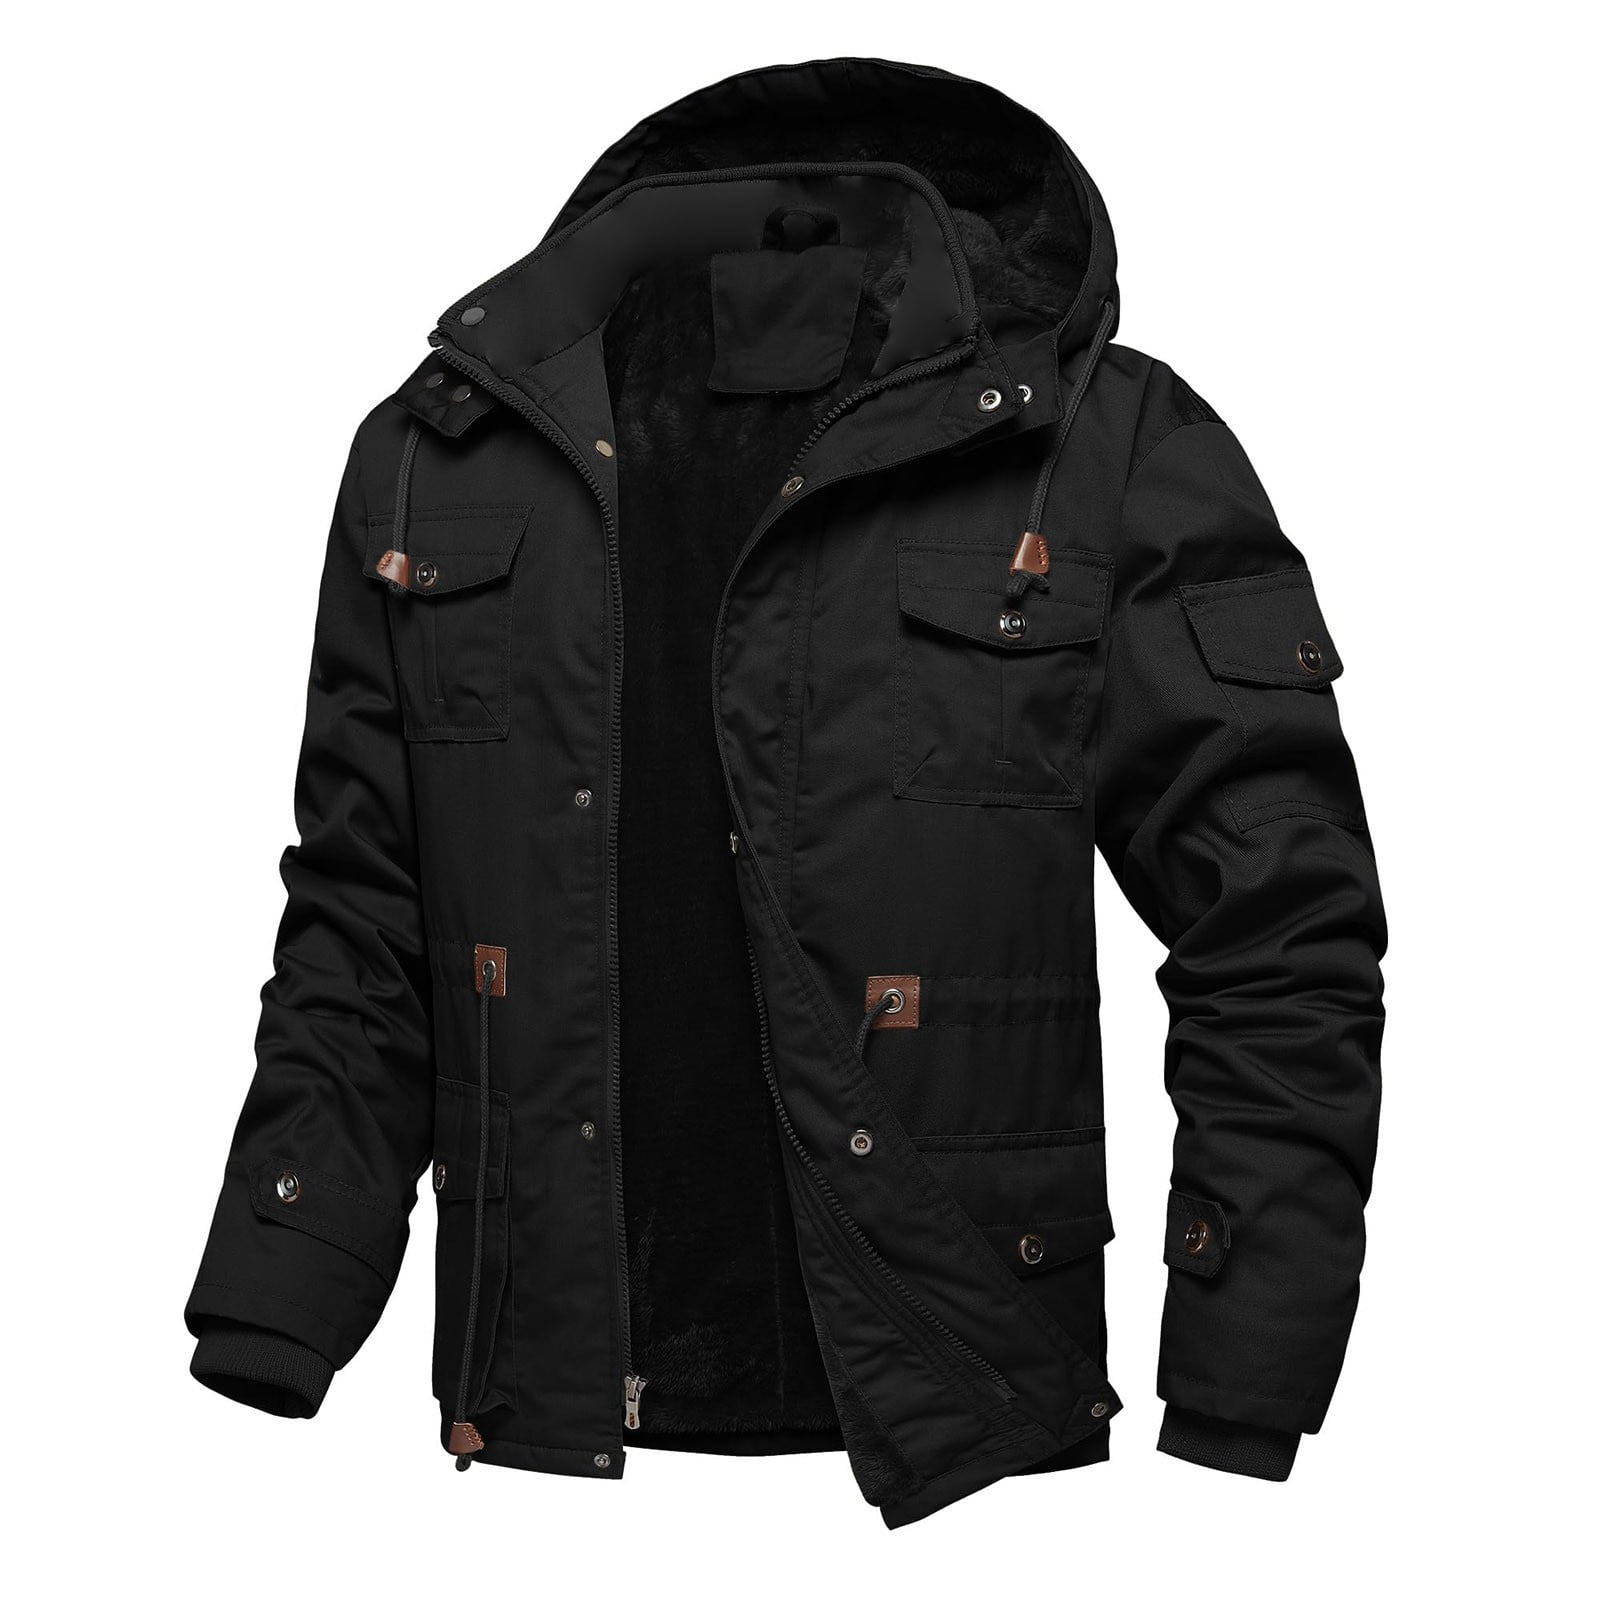 Manxivoo Winter Jackets for Men, Men's Winter Jacket Lined Thick ...